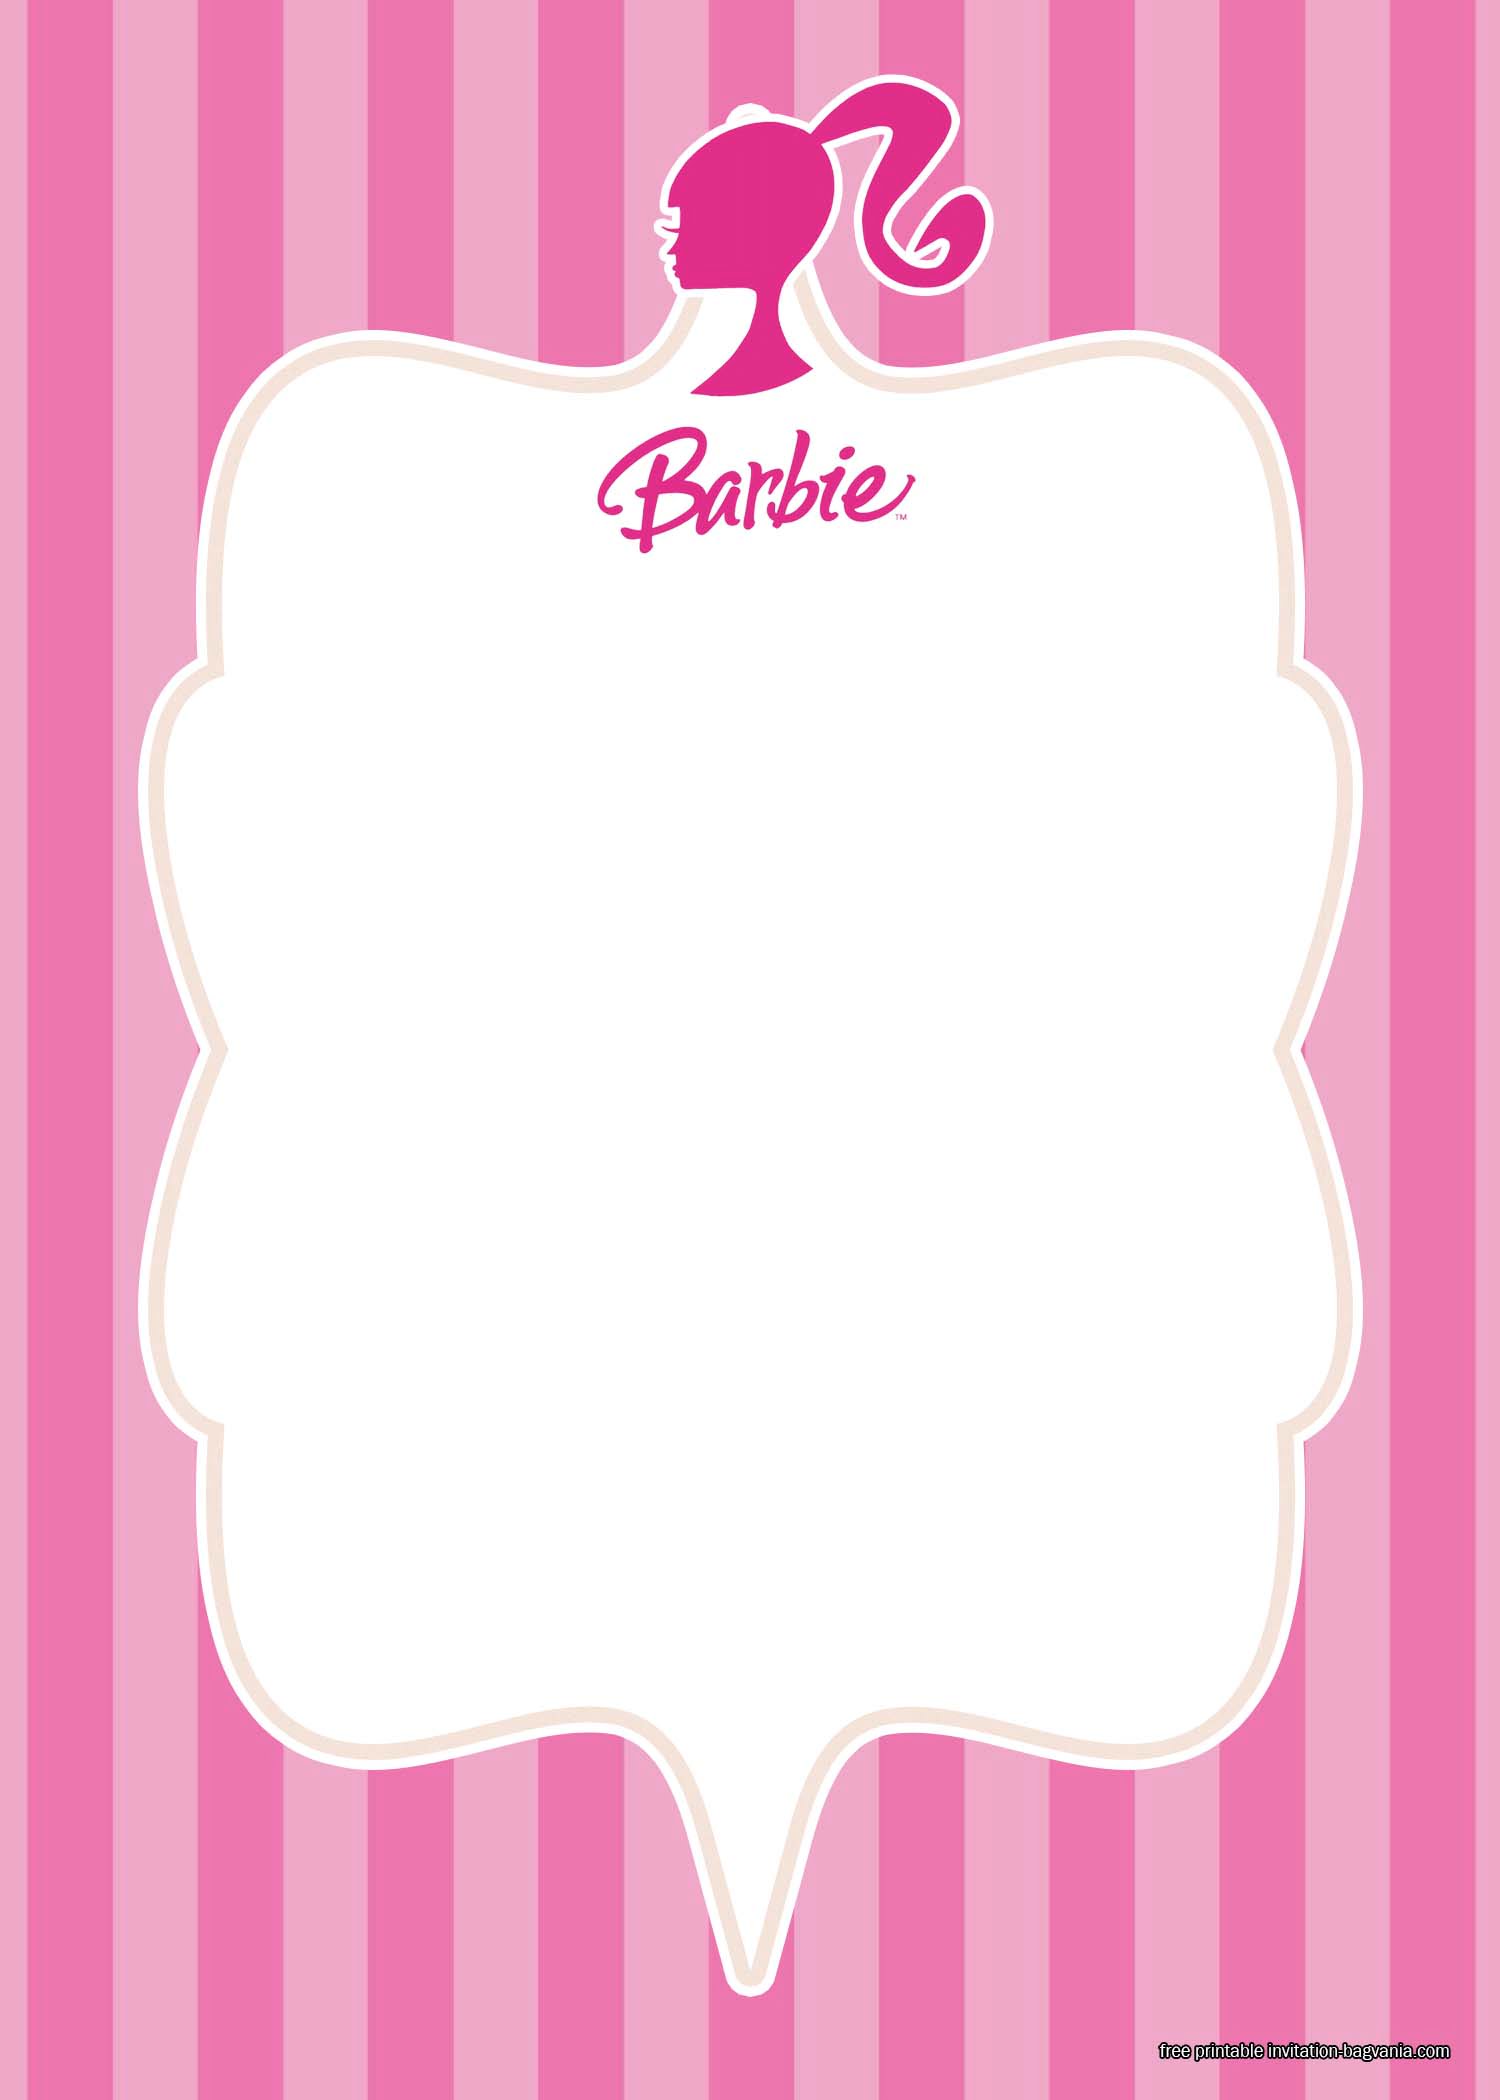 barbie-party-invitations-template-ubicaciondepersonas-cdmx-gob-mx